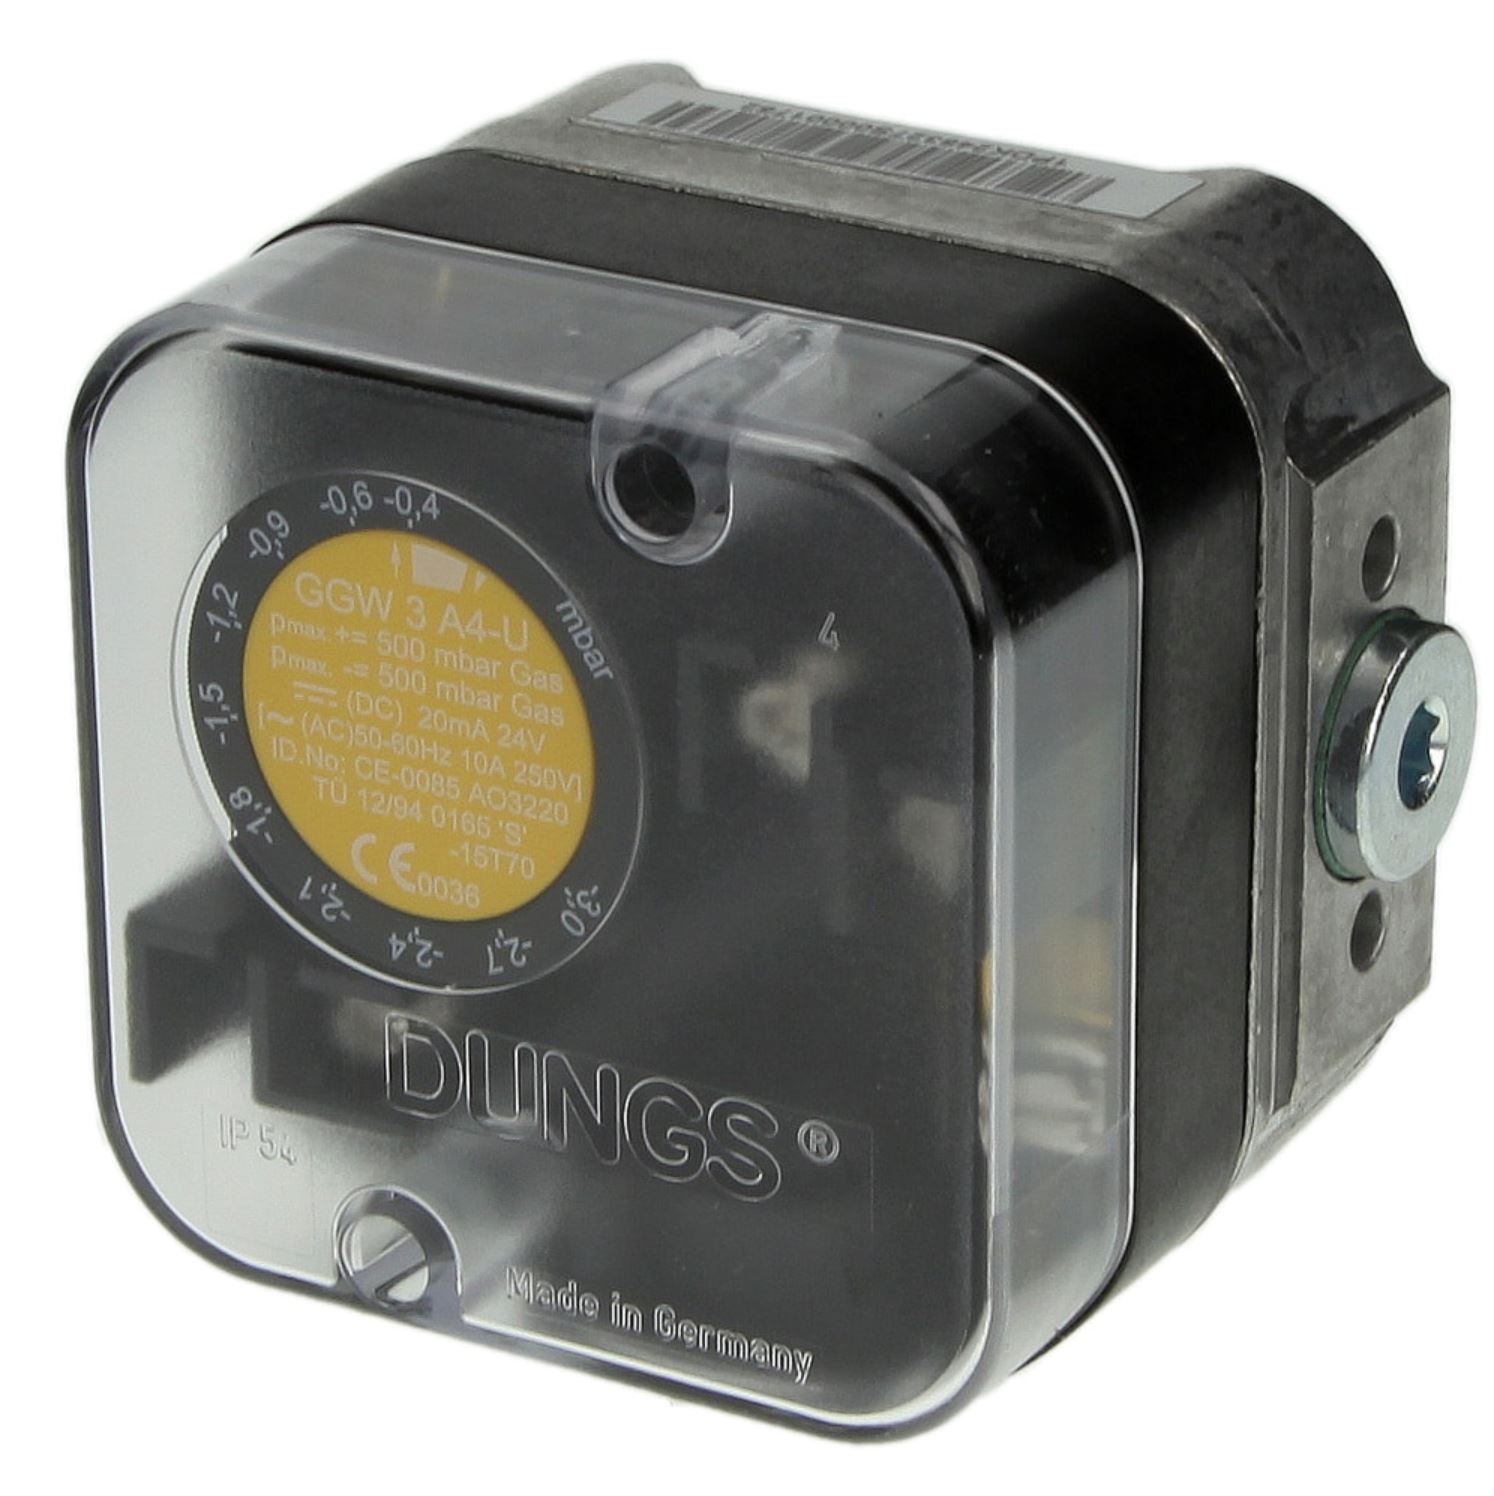 Dungs Differenzdruckwächter GGW 3 A4U - 248327